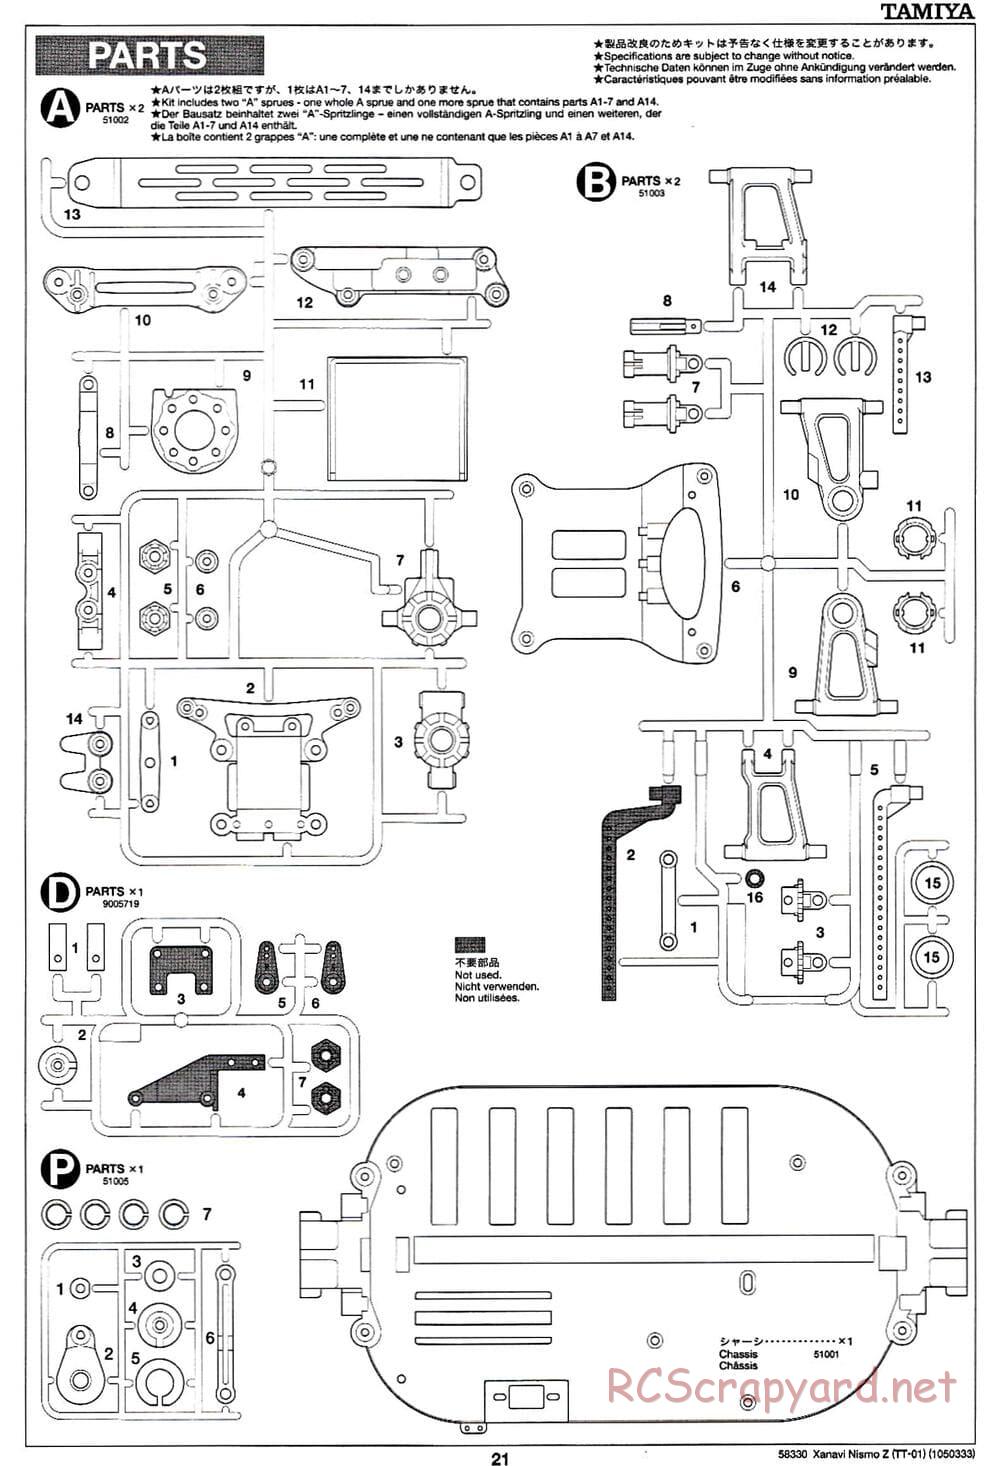 Tamiya - Xanavi Nismo Z - TT-01 Chassis - Manual - Page 21